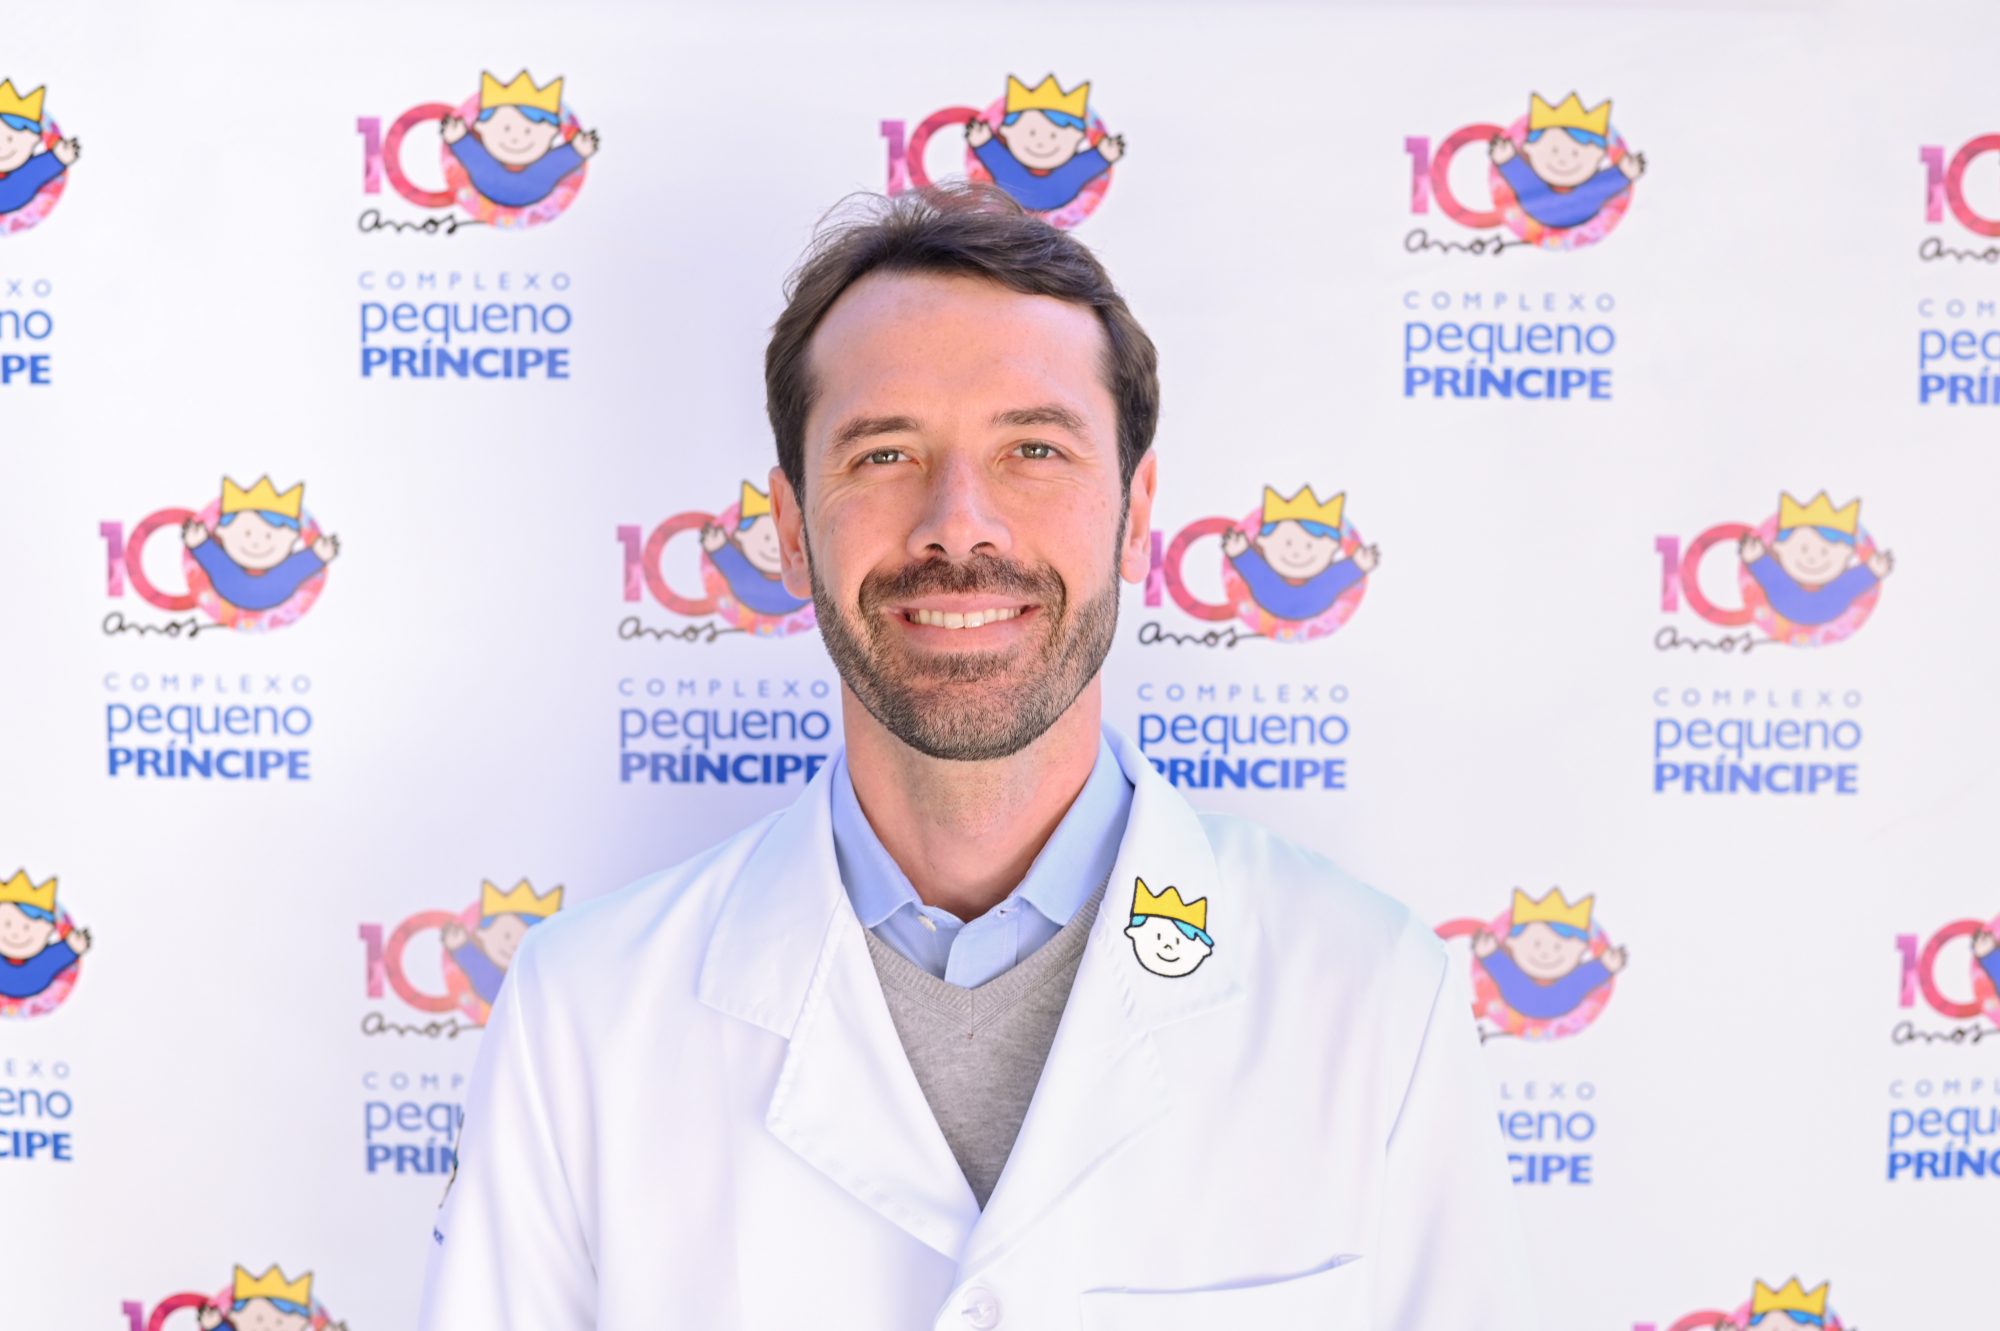 Dr. José Sampaio Neto